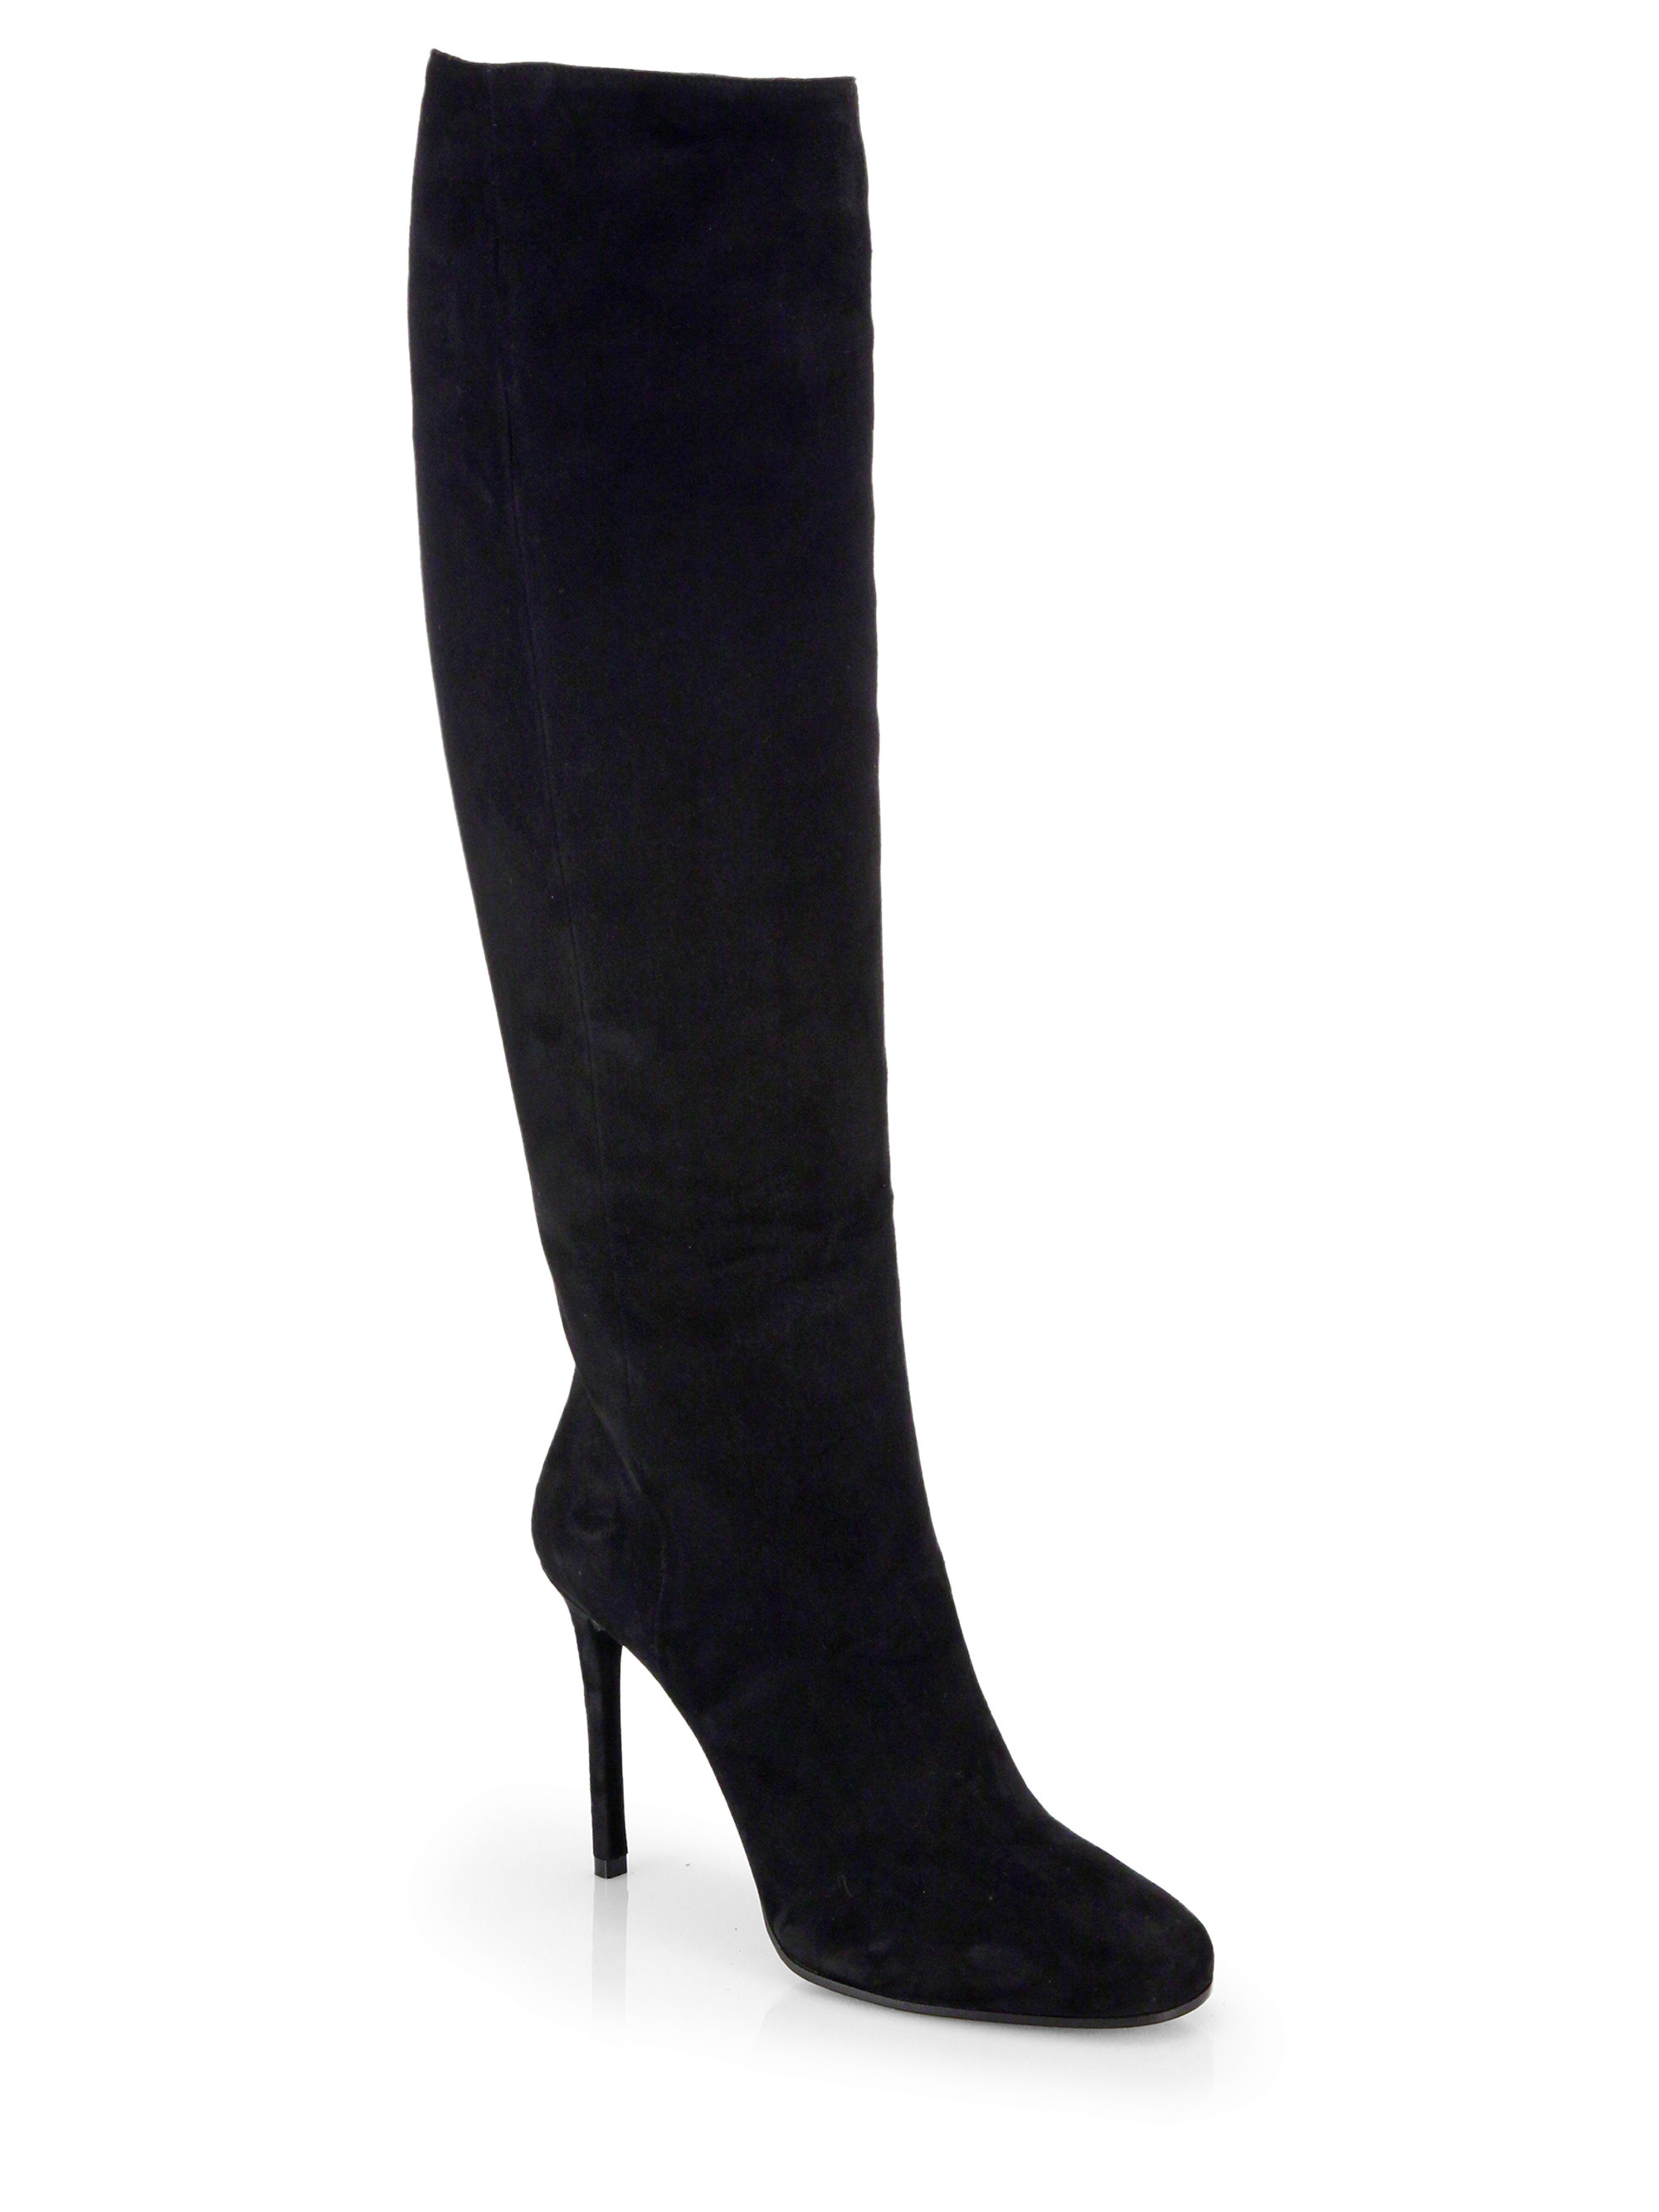 Prada Suede Knee-High Boots in Nero (Black) - Lyst